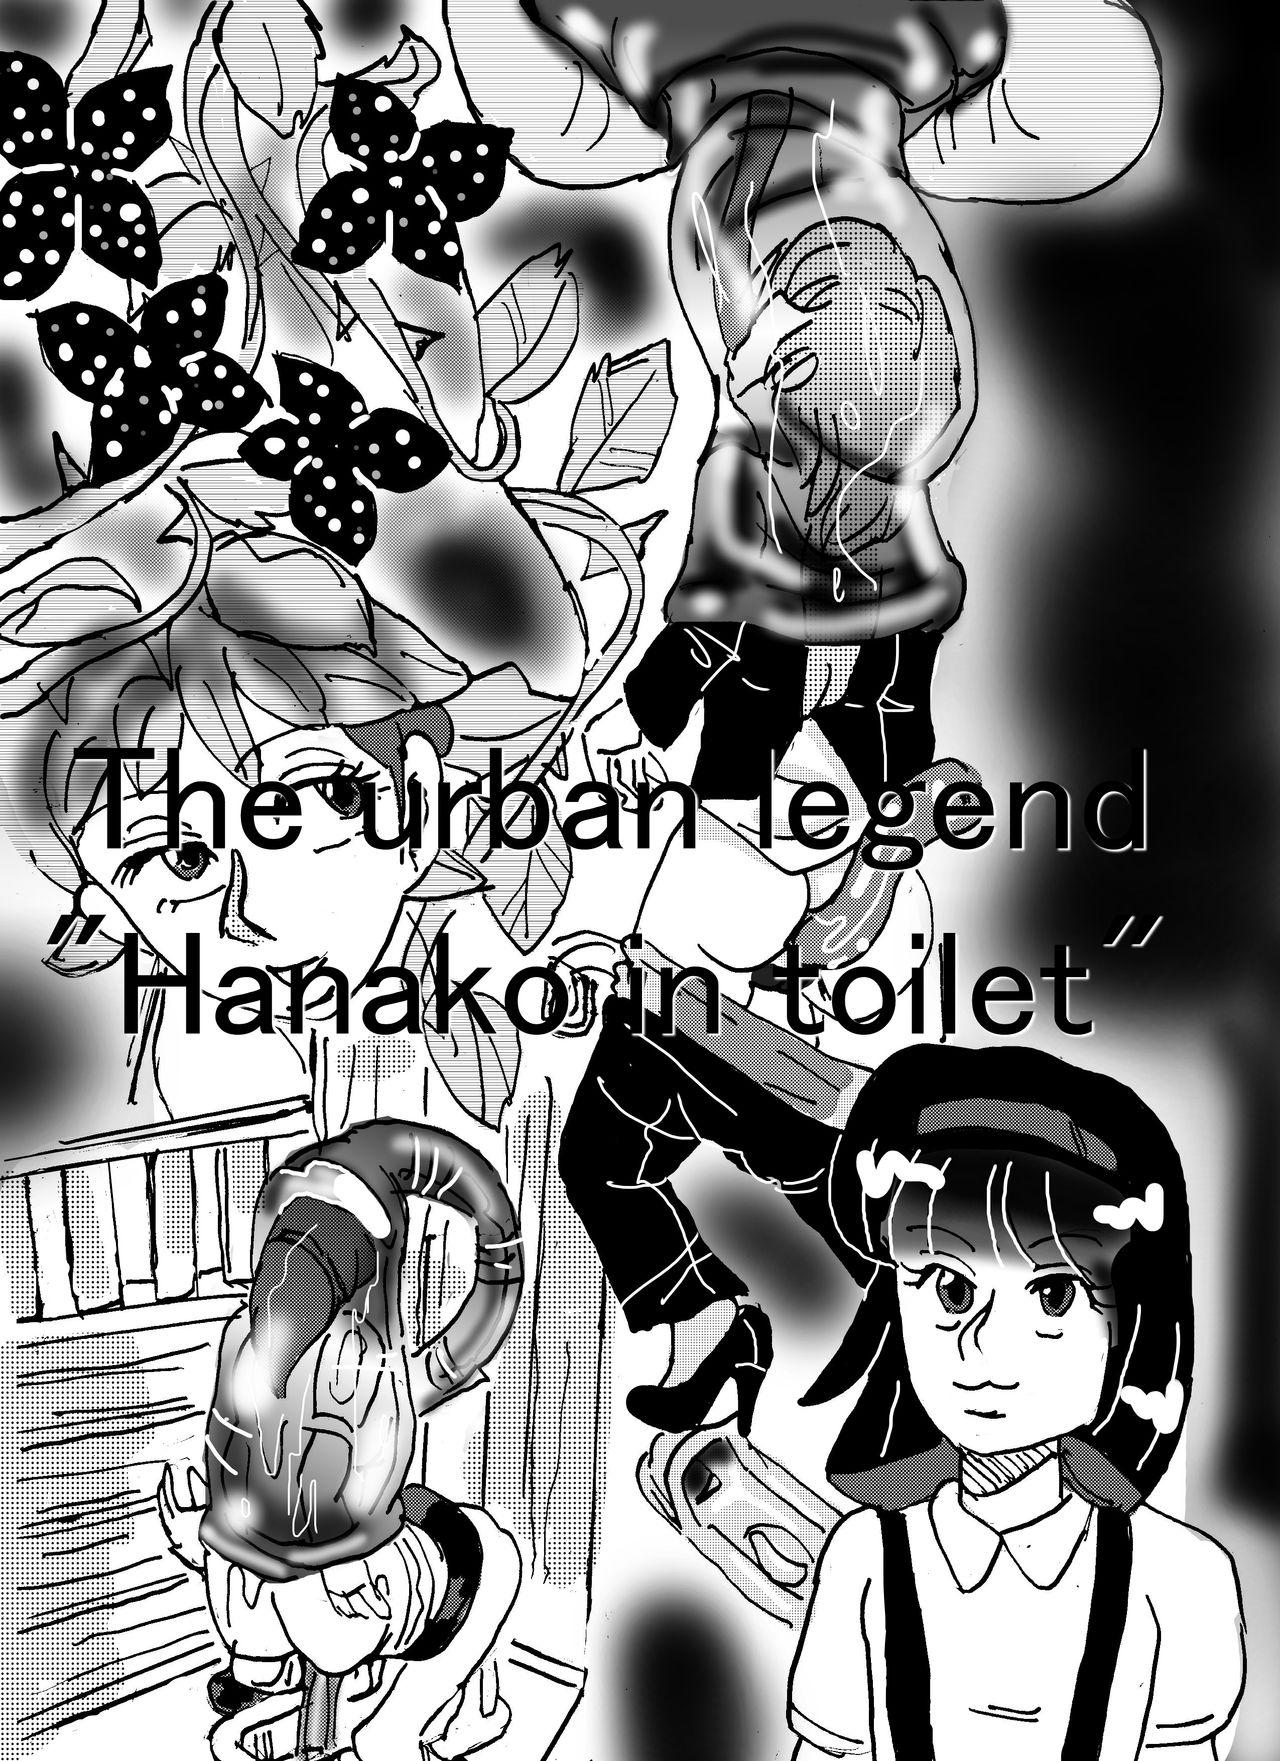 Cheating Urban legend "Ha*ako in toilet" - Original Creamy - Picture 1